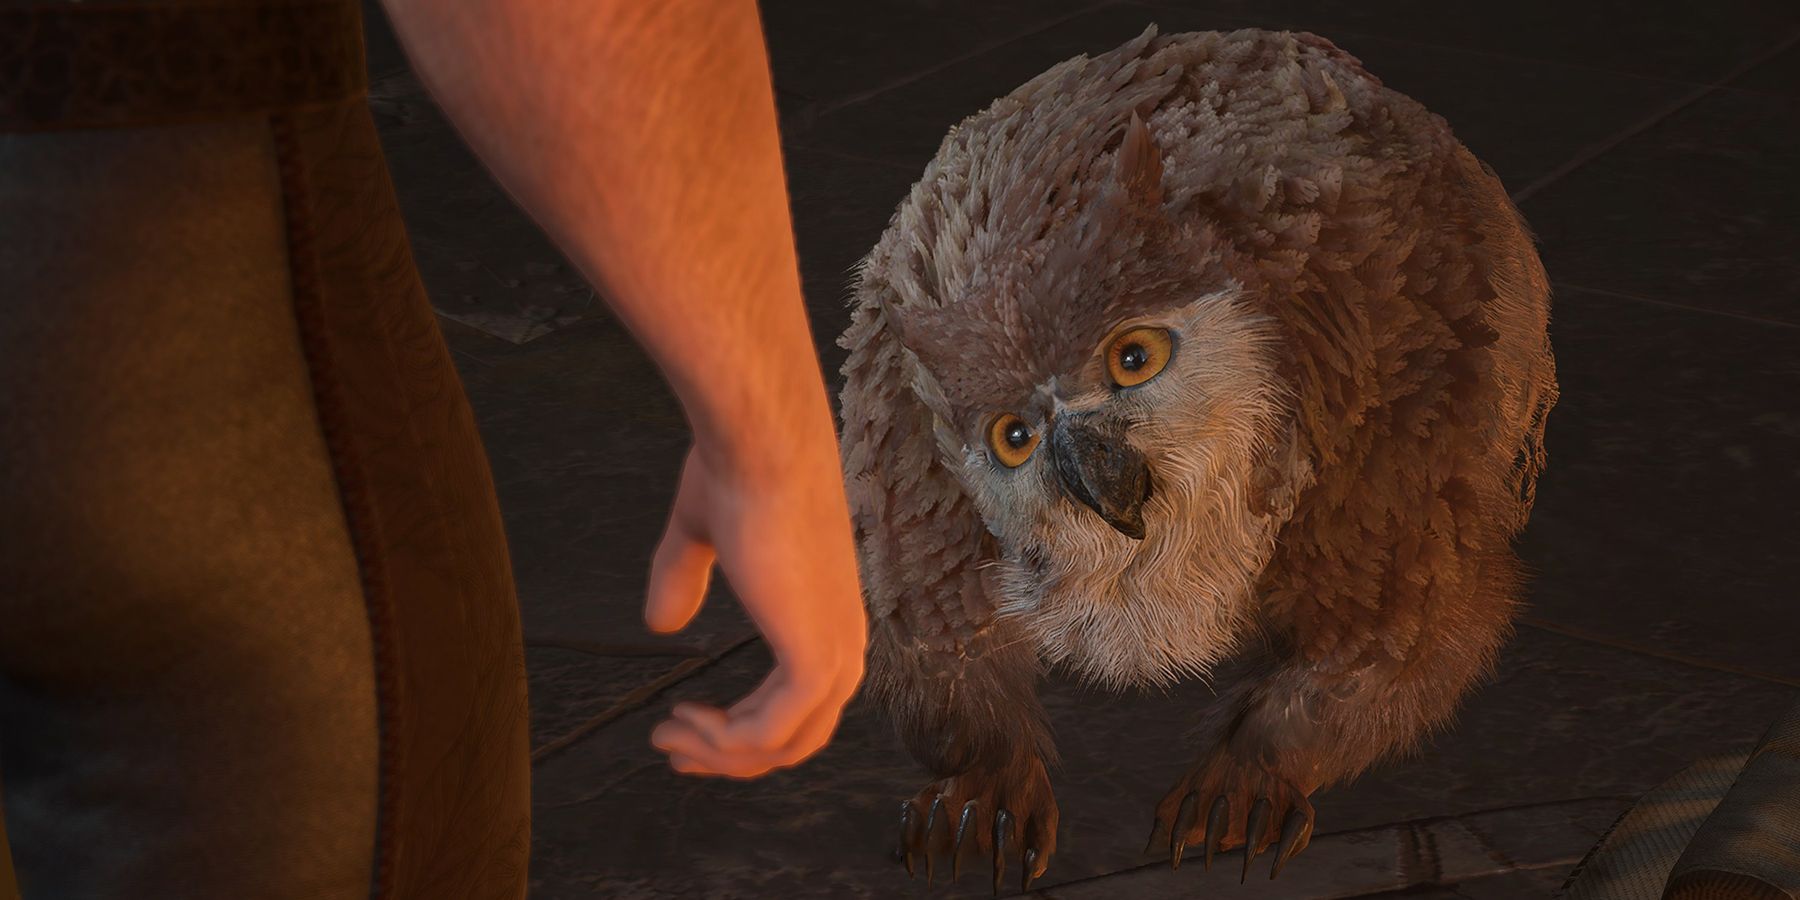 Baldurs Gate 3 cute owlbear cub tilting its head